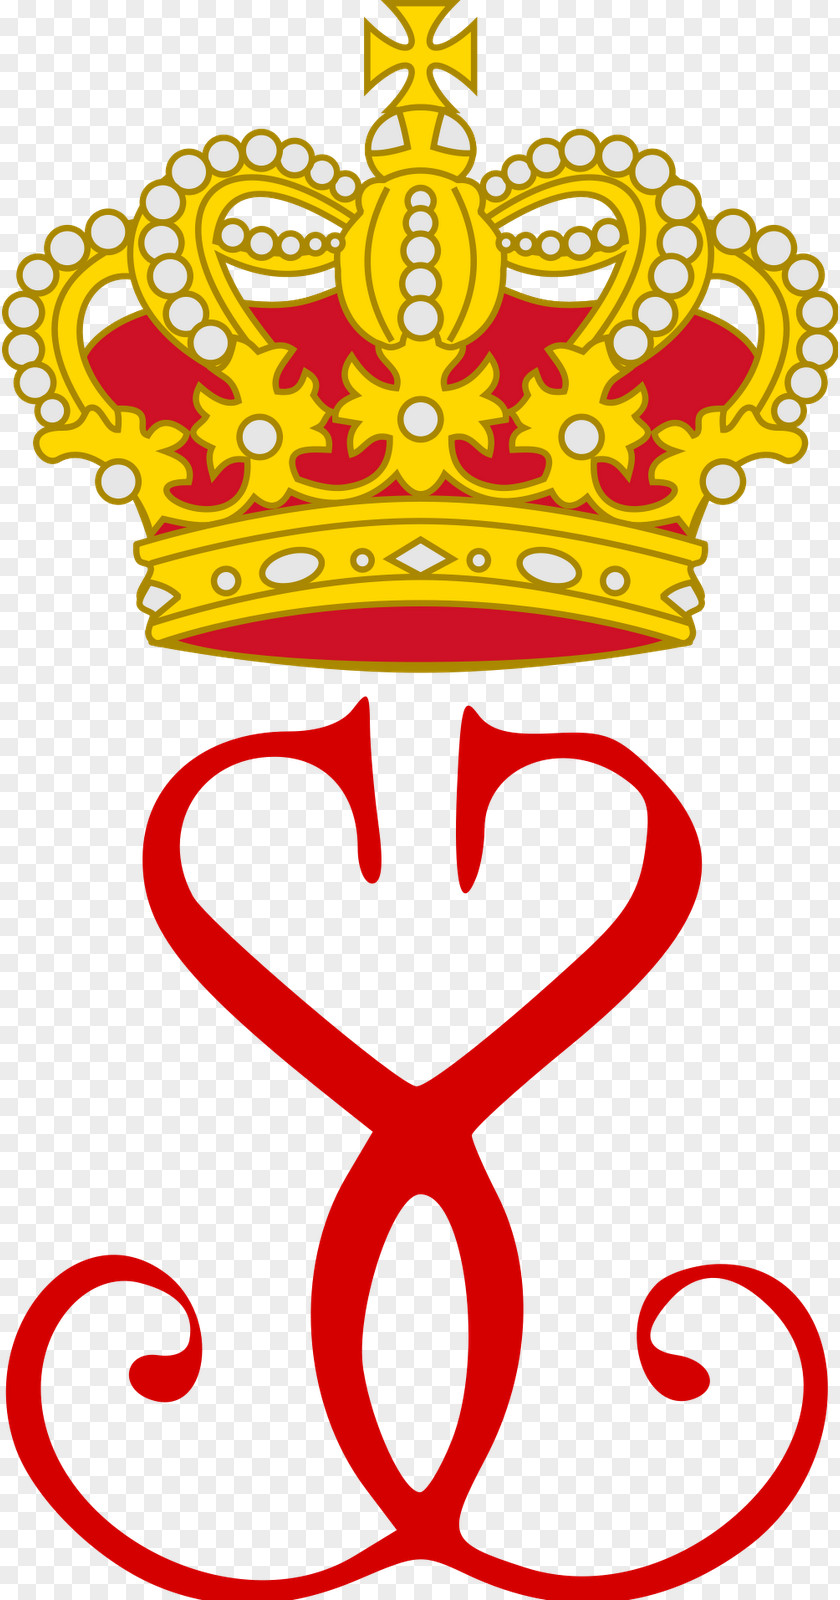 Royal Television Society Prince's Palace Of Monaco Monogram Cypher Coat Arms Hassana PNG